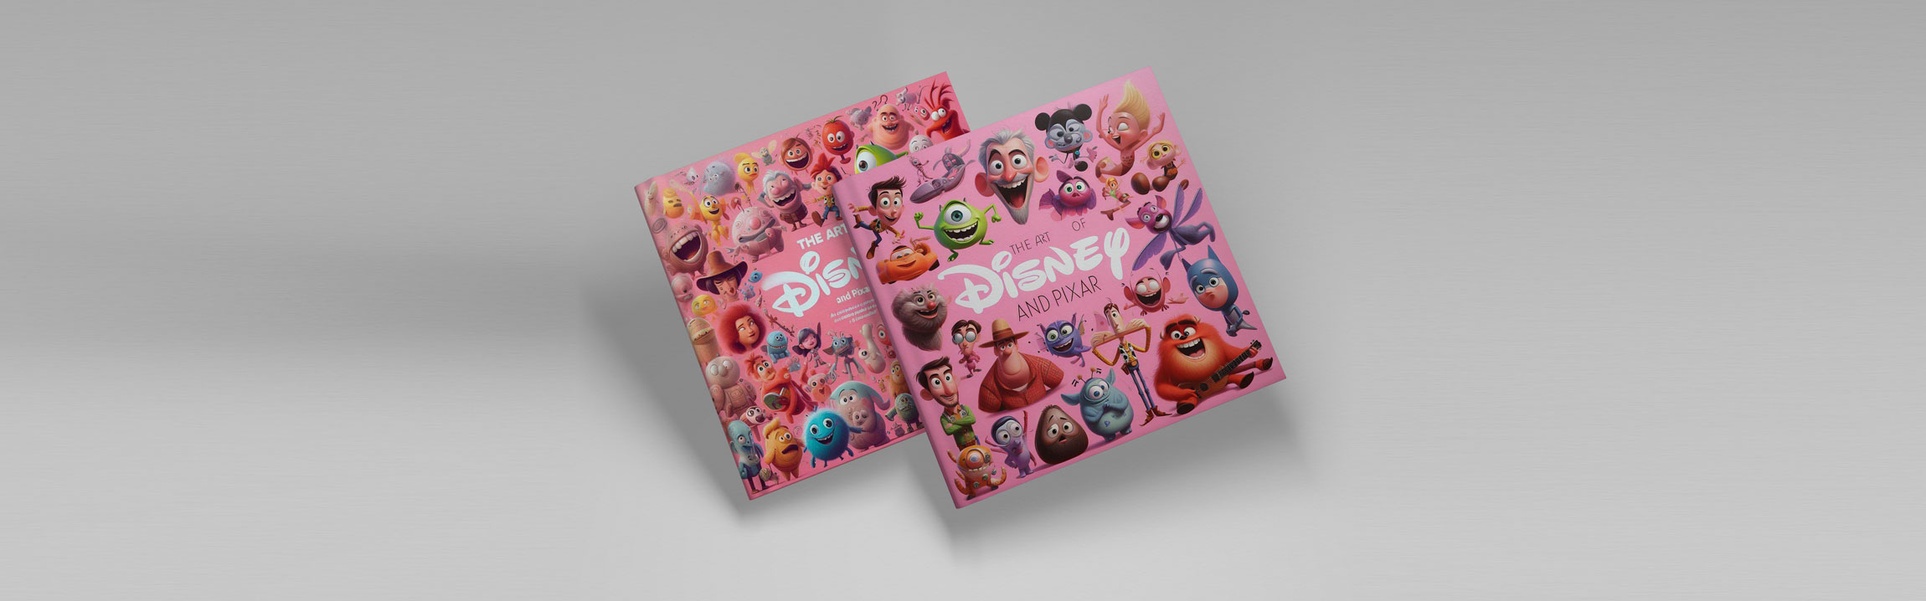 The Art of Inside Out | Book Flip Through | Disney Pixar